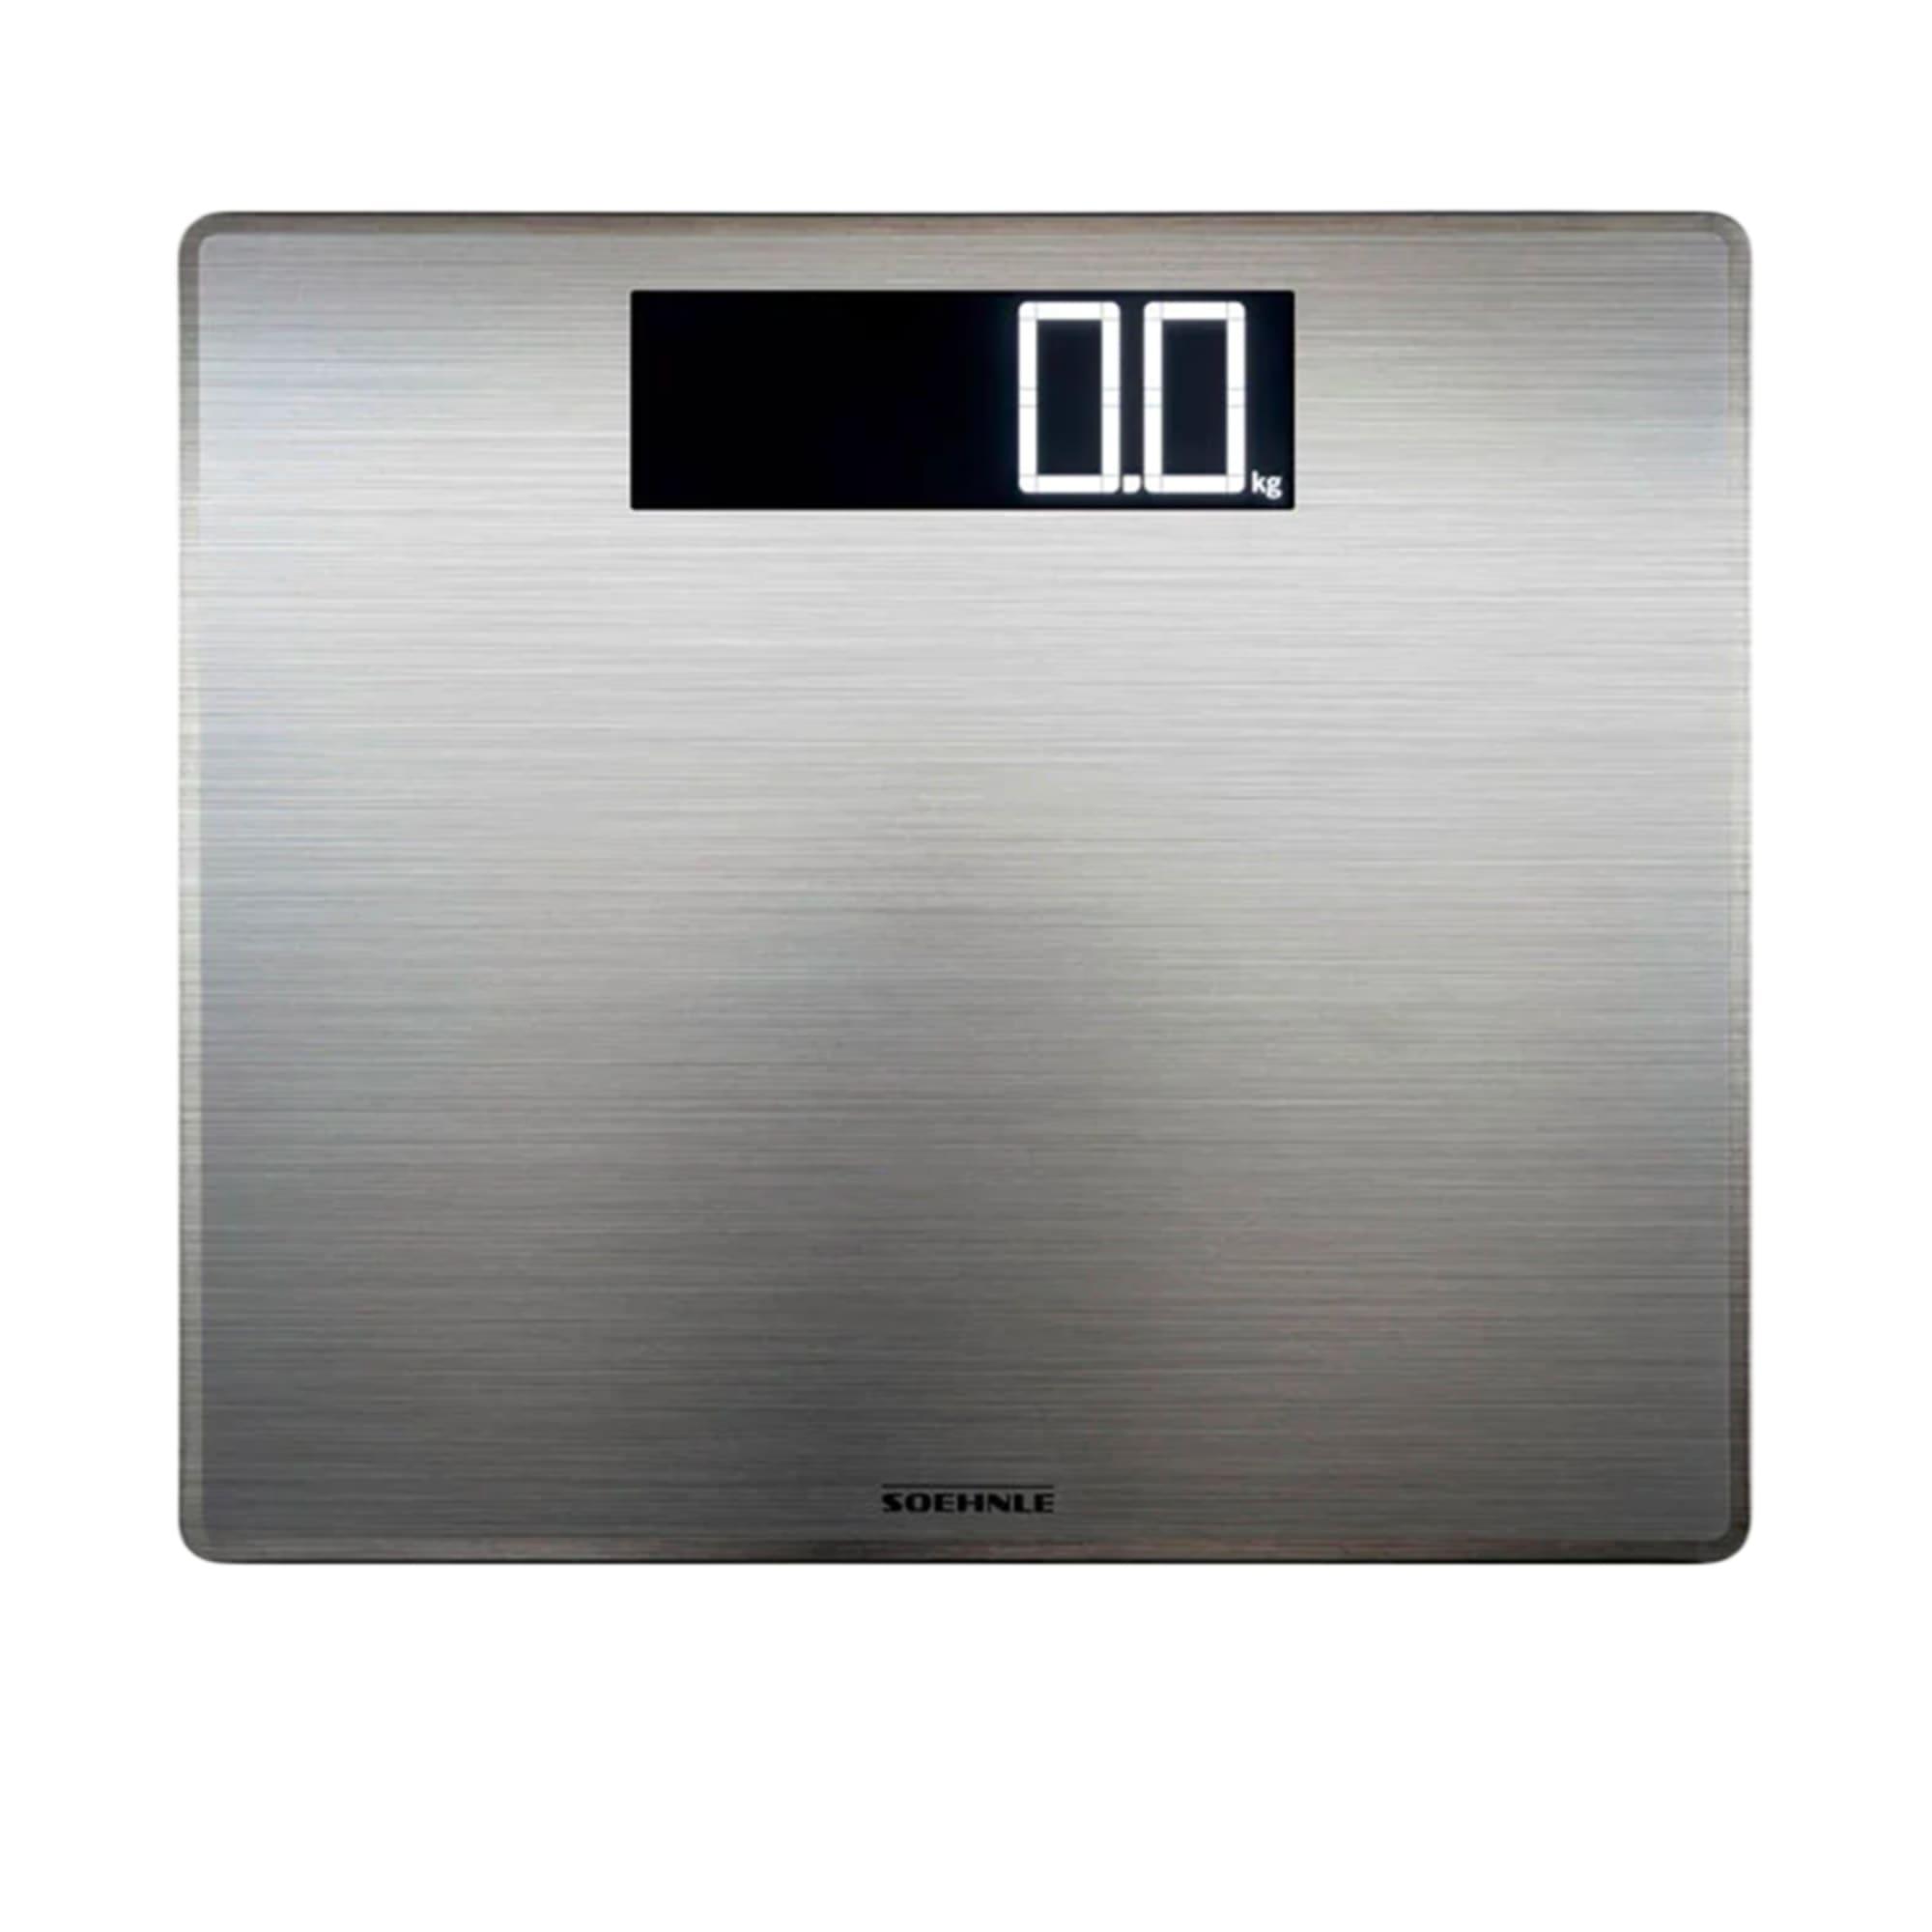 Soehnle Style Sense Stainless Steel Safe 300 Digital Kitchen Scale 180kg Image 1